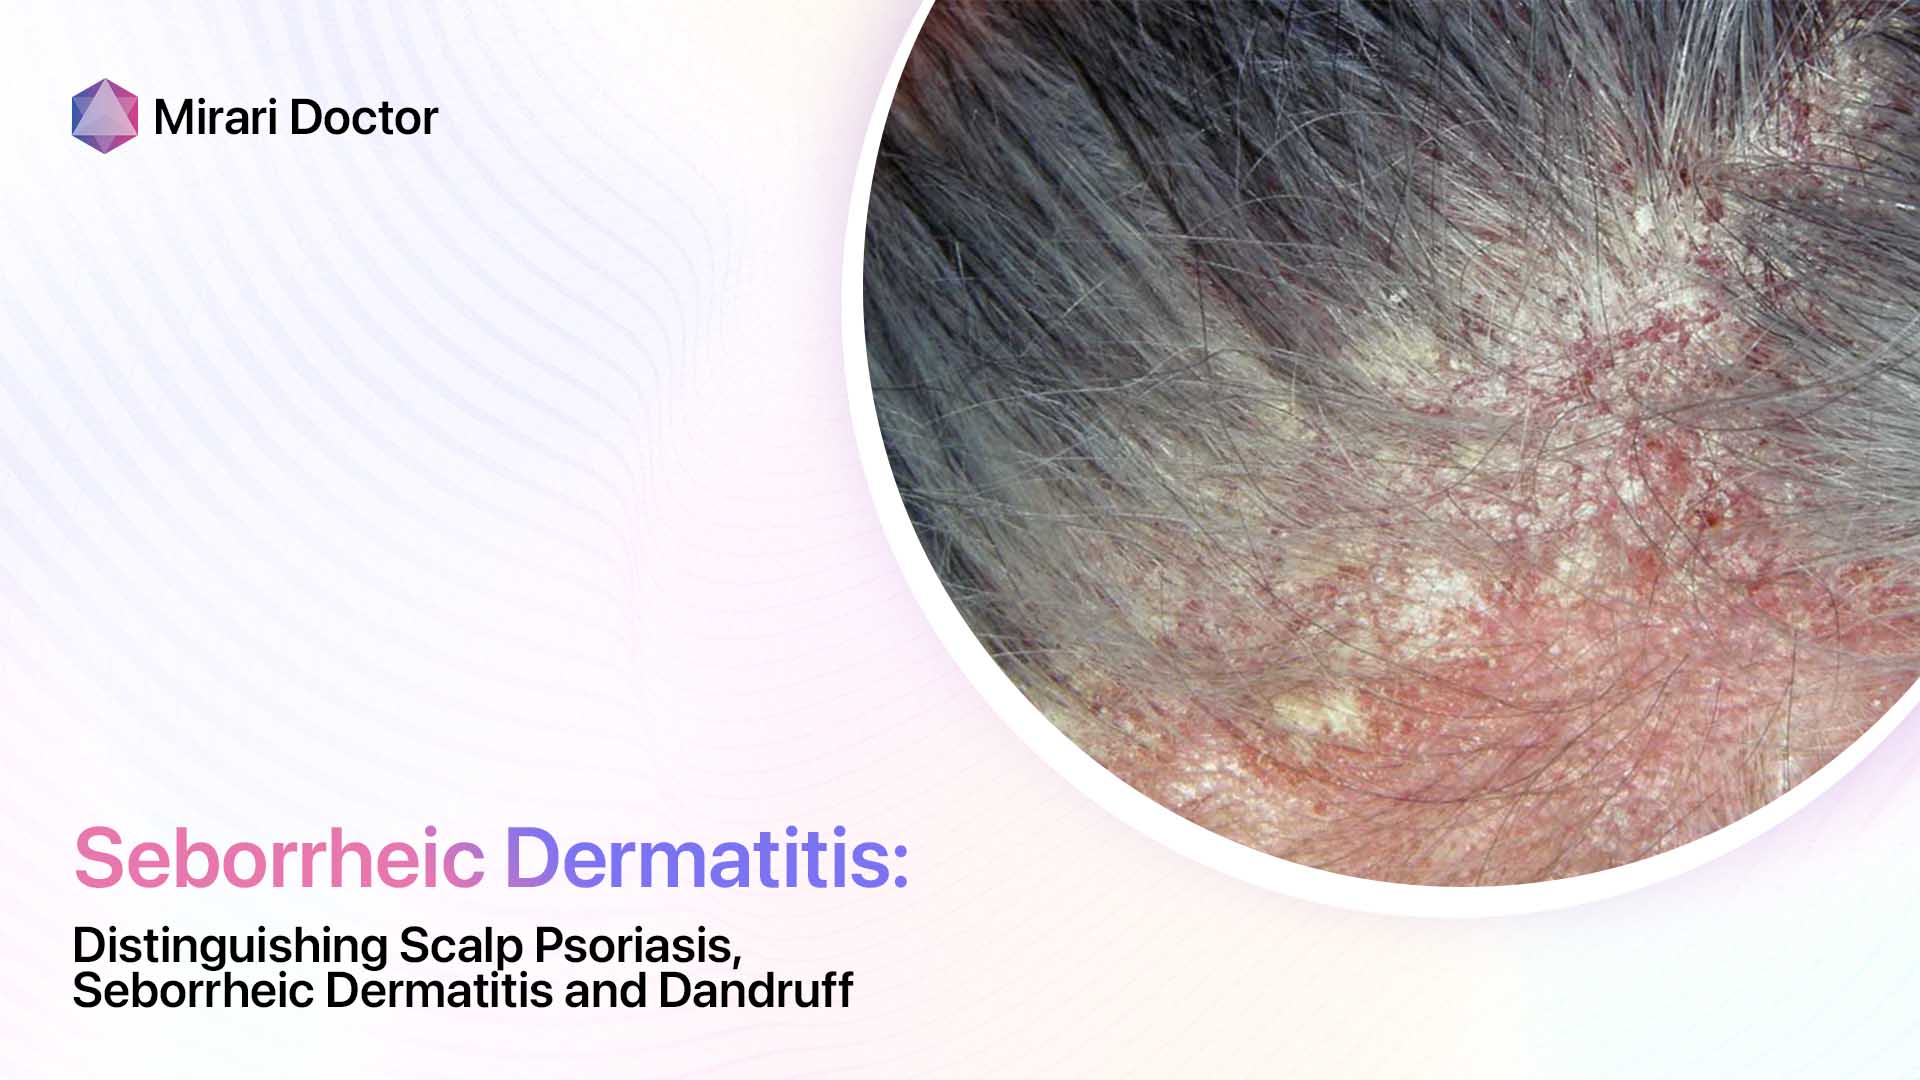 Distinguishing Scalp Psoriasis Seborrheic Dermatitis And Dandruff